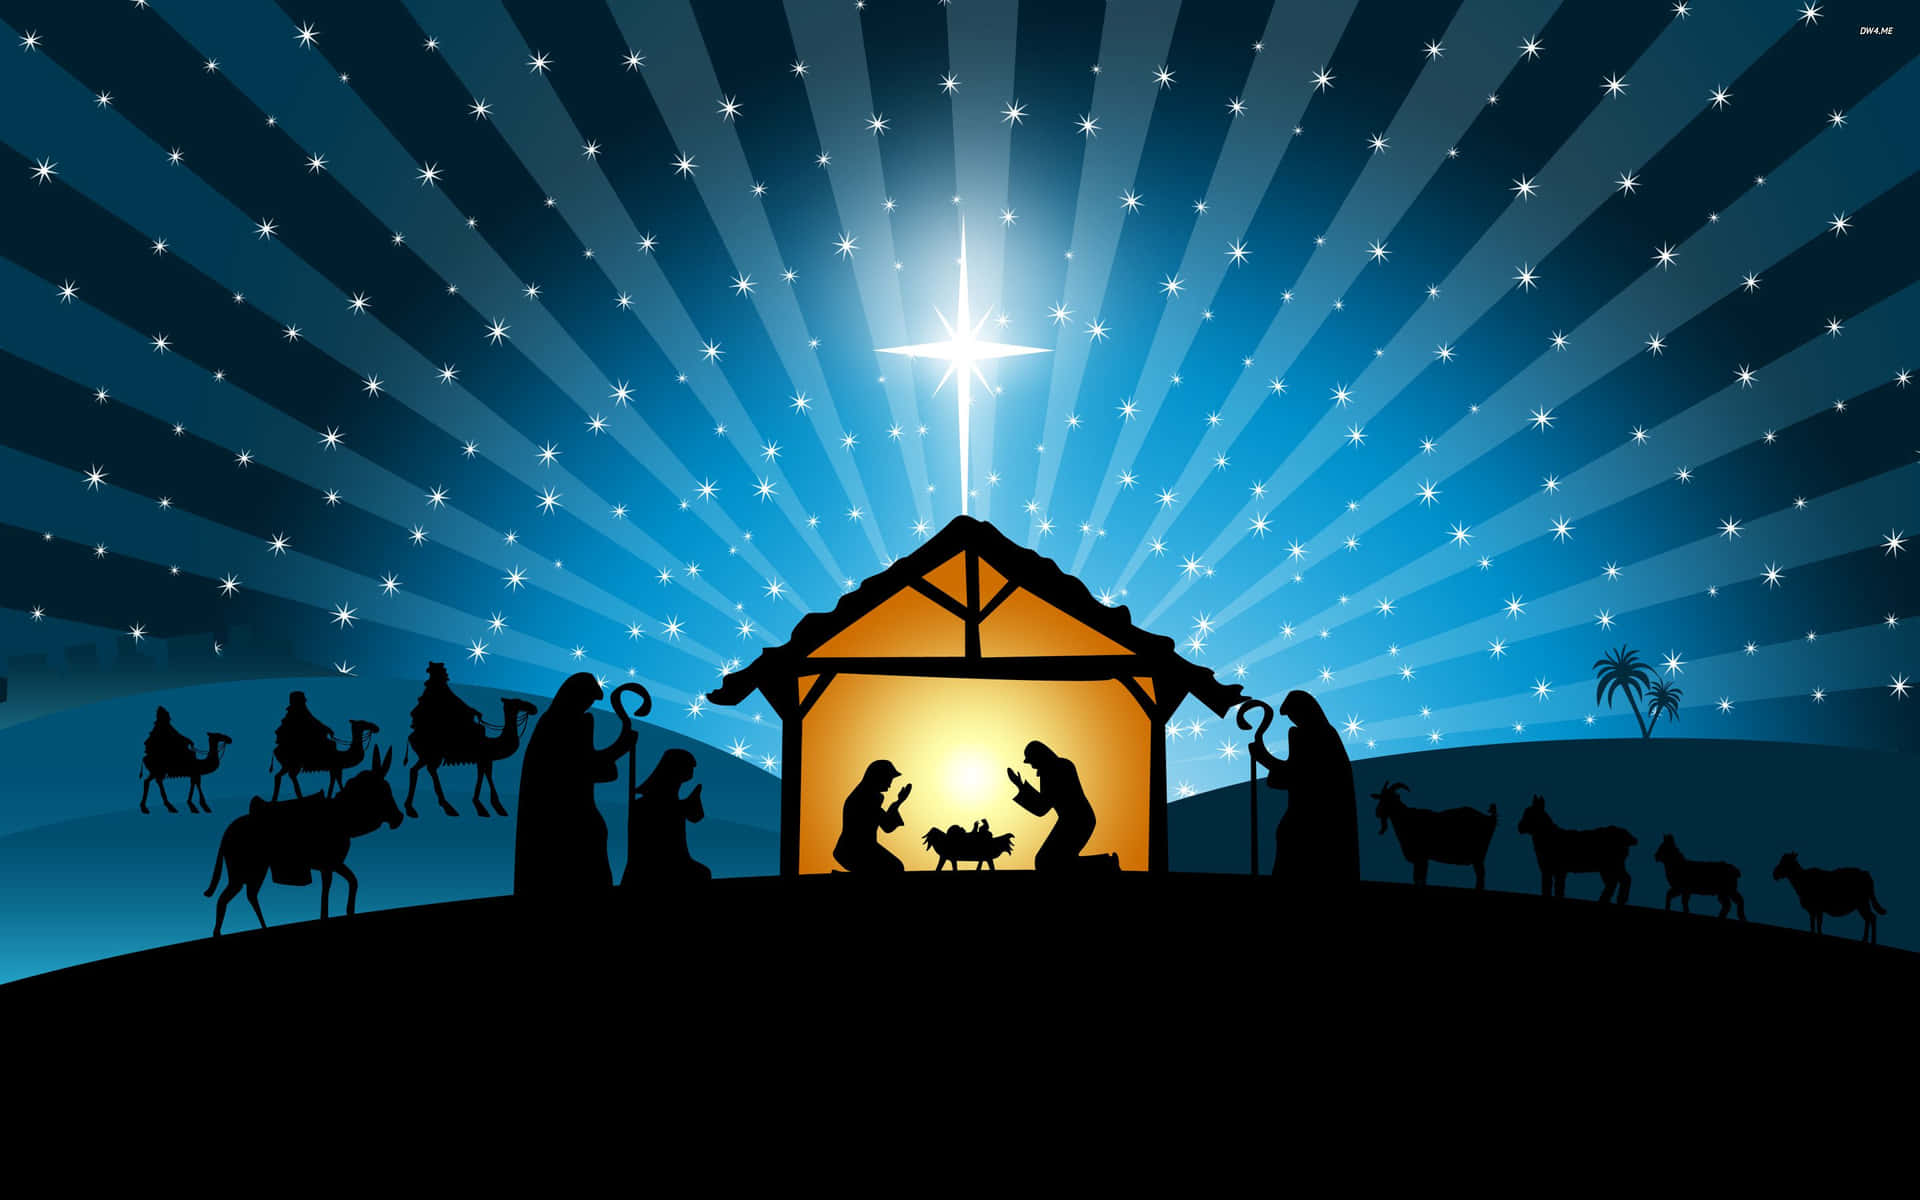 A Charming Scene of Jesus's Nativity